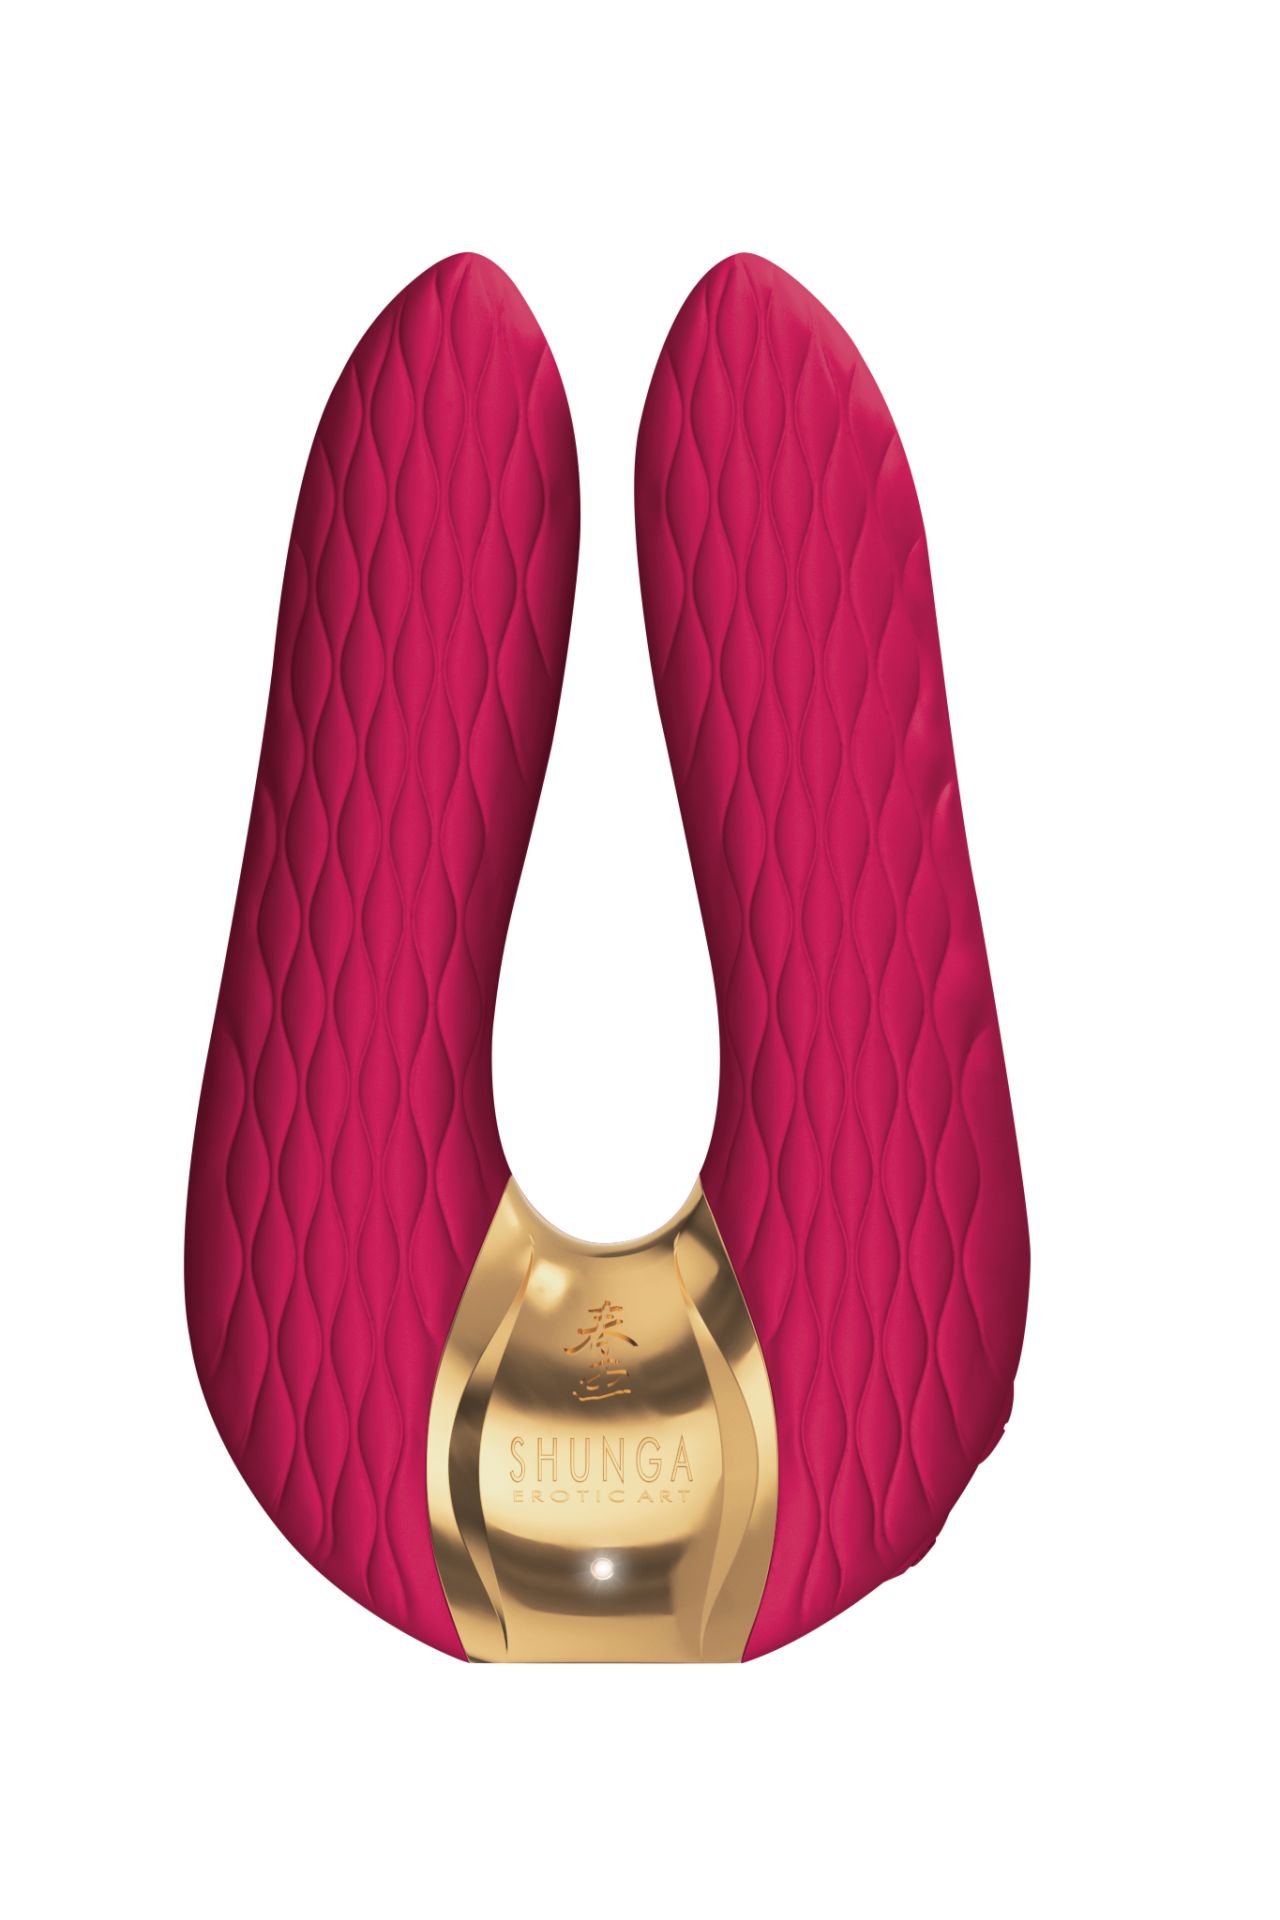 Shunga - Aiko Luxe Clitoris Vibrator